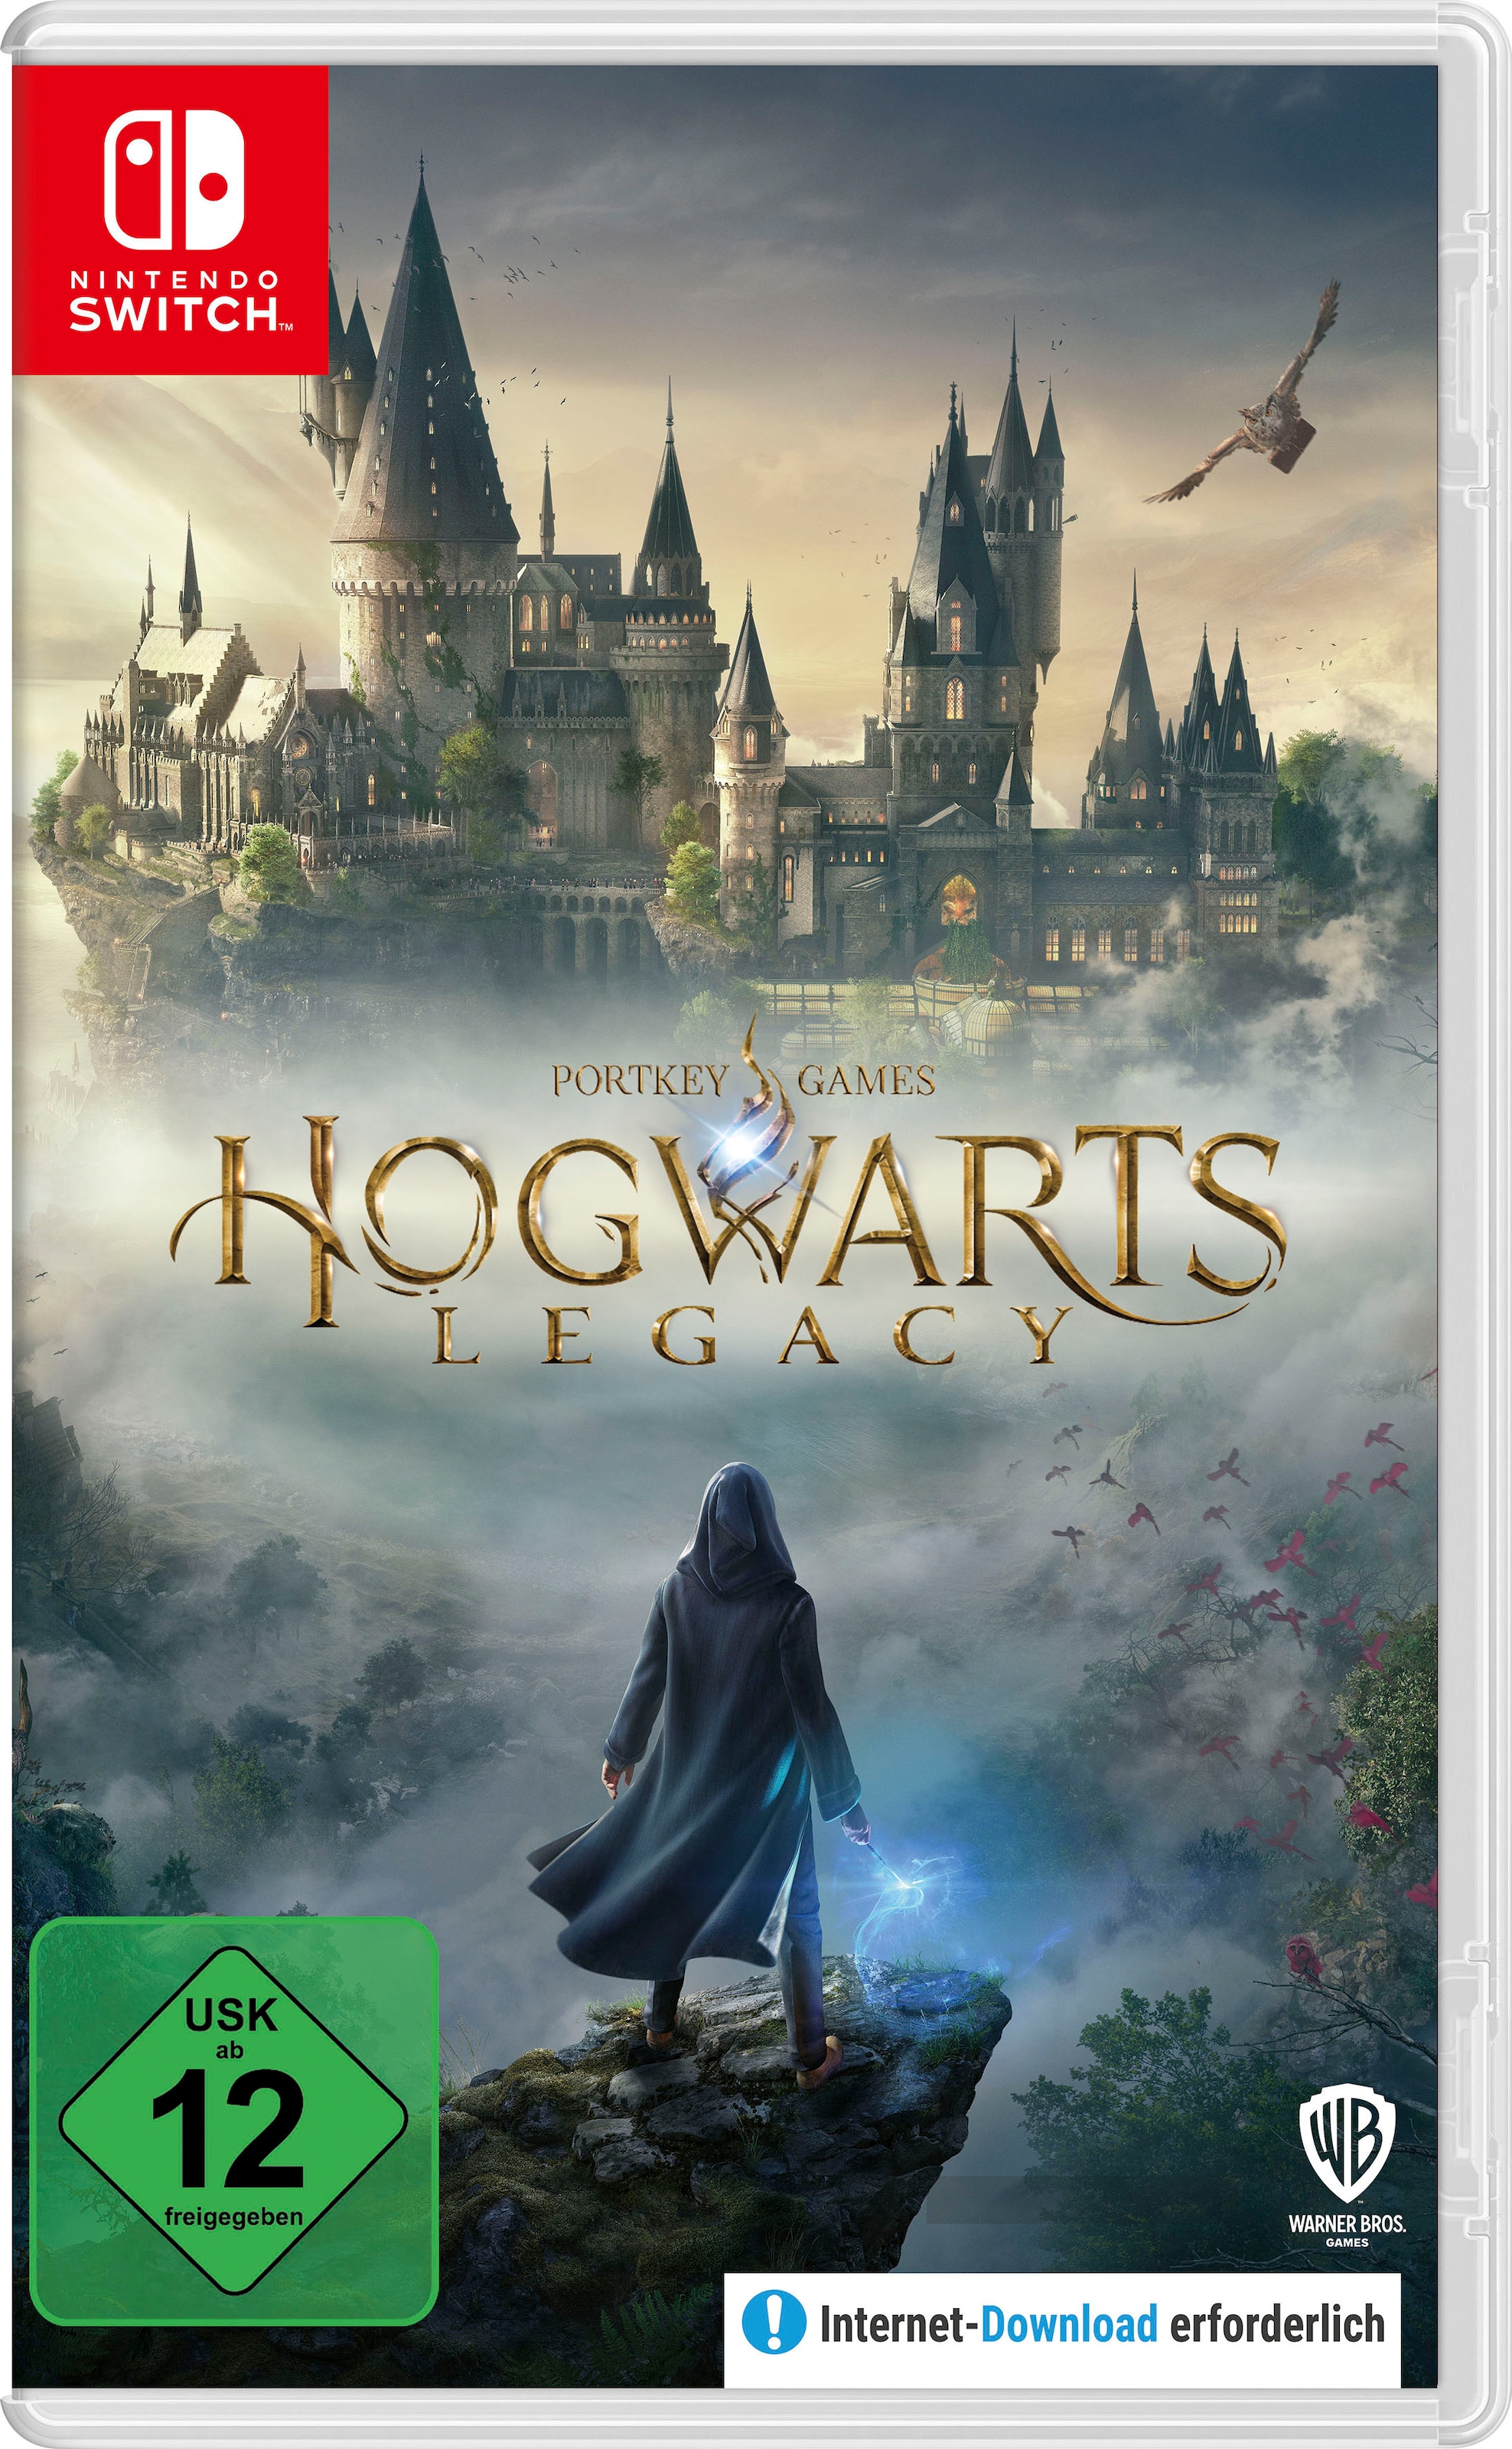 Warner Games Spielesoftware »Hogwarts Legacy«, Nintendo Switch